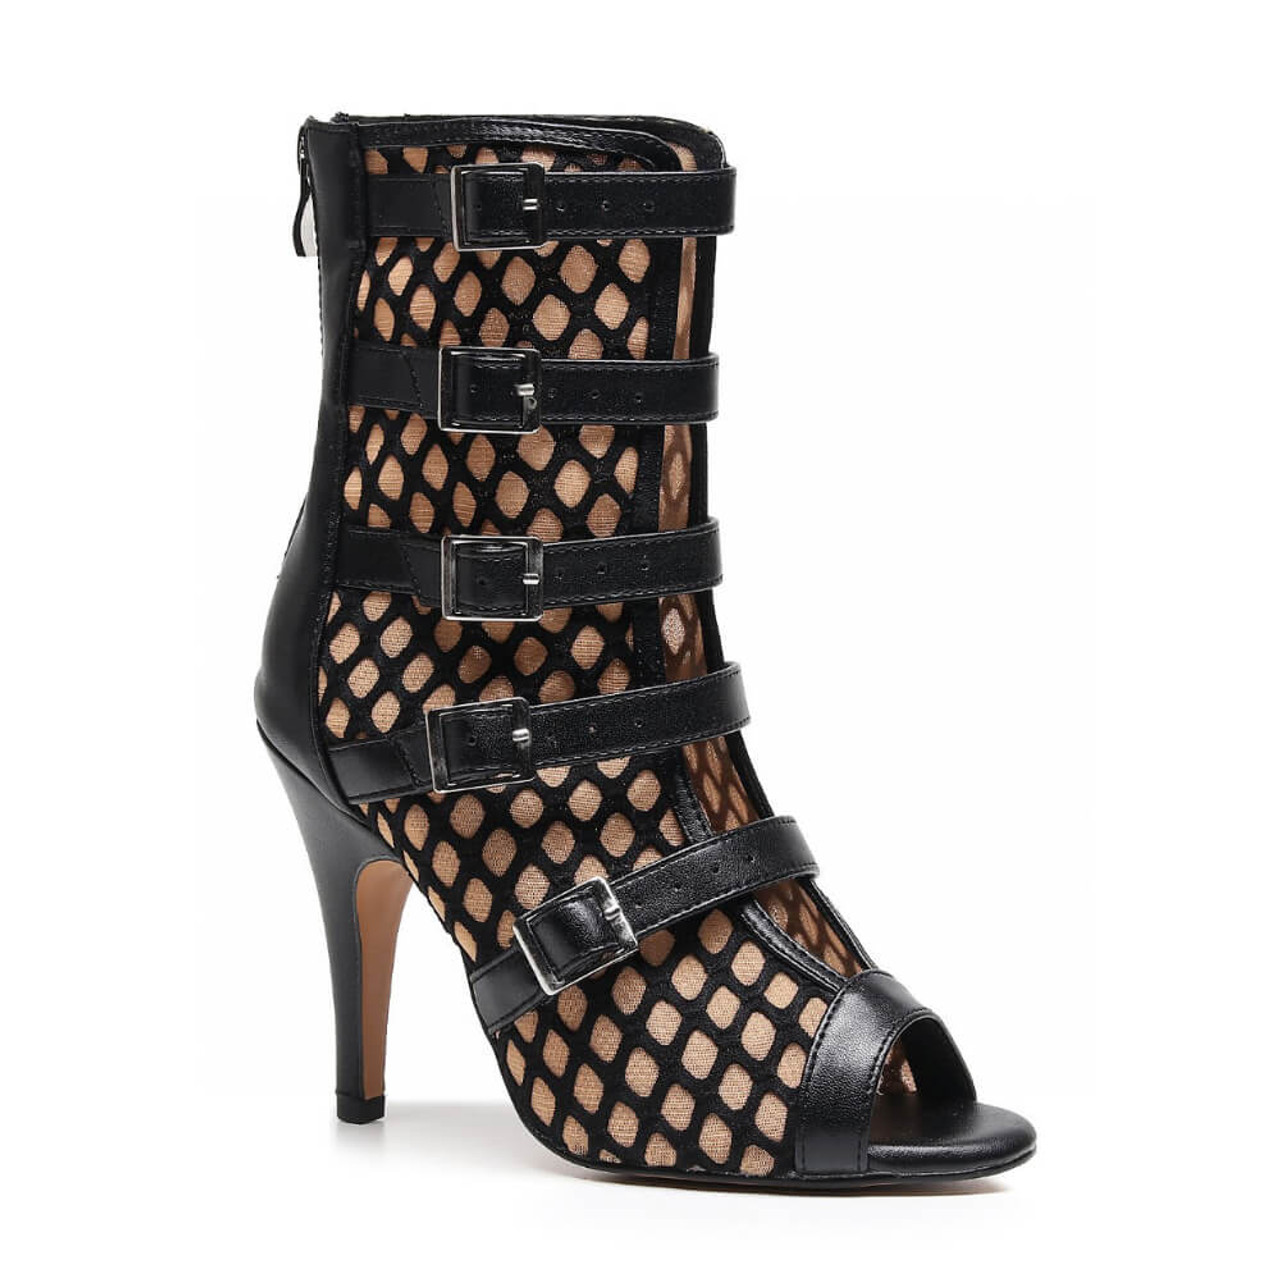 Sygole Black Platform Ankle Wrap High Heel Sandals | Sandals heels, High  heel sandals, Black sandals heels